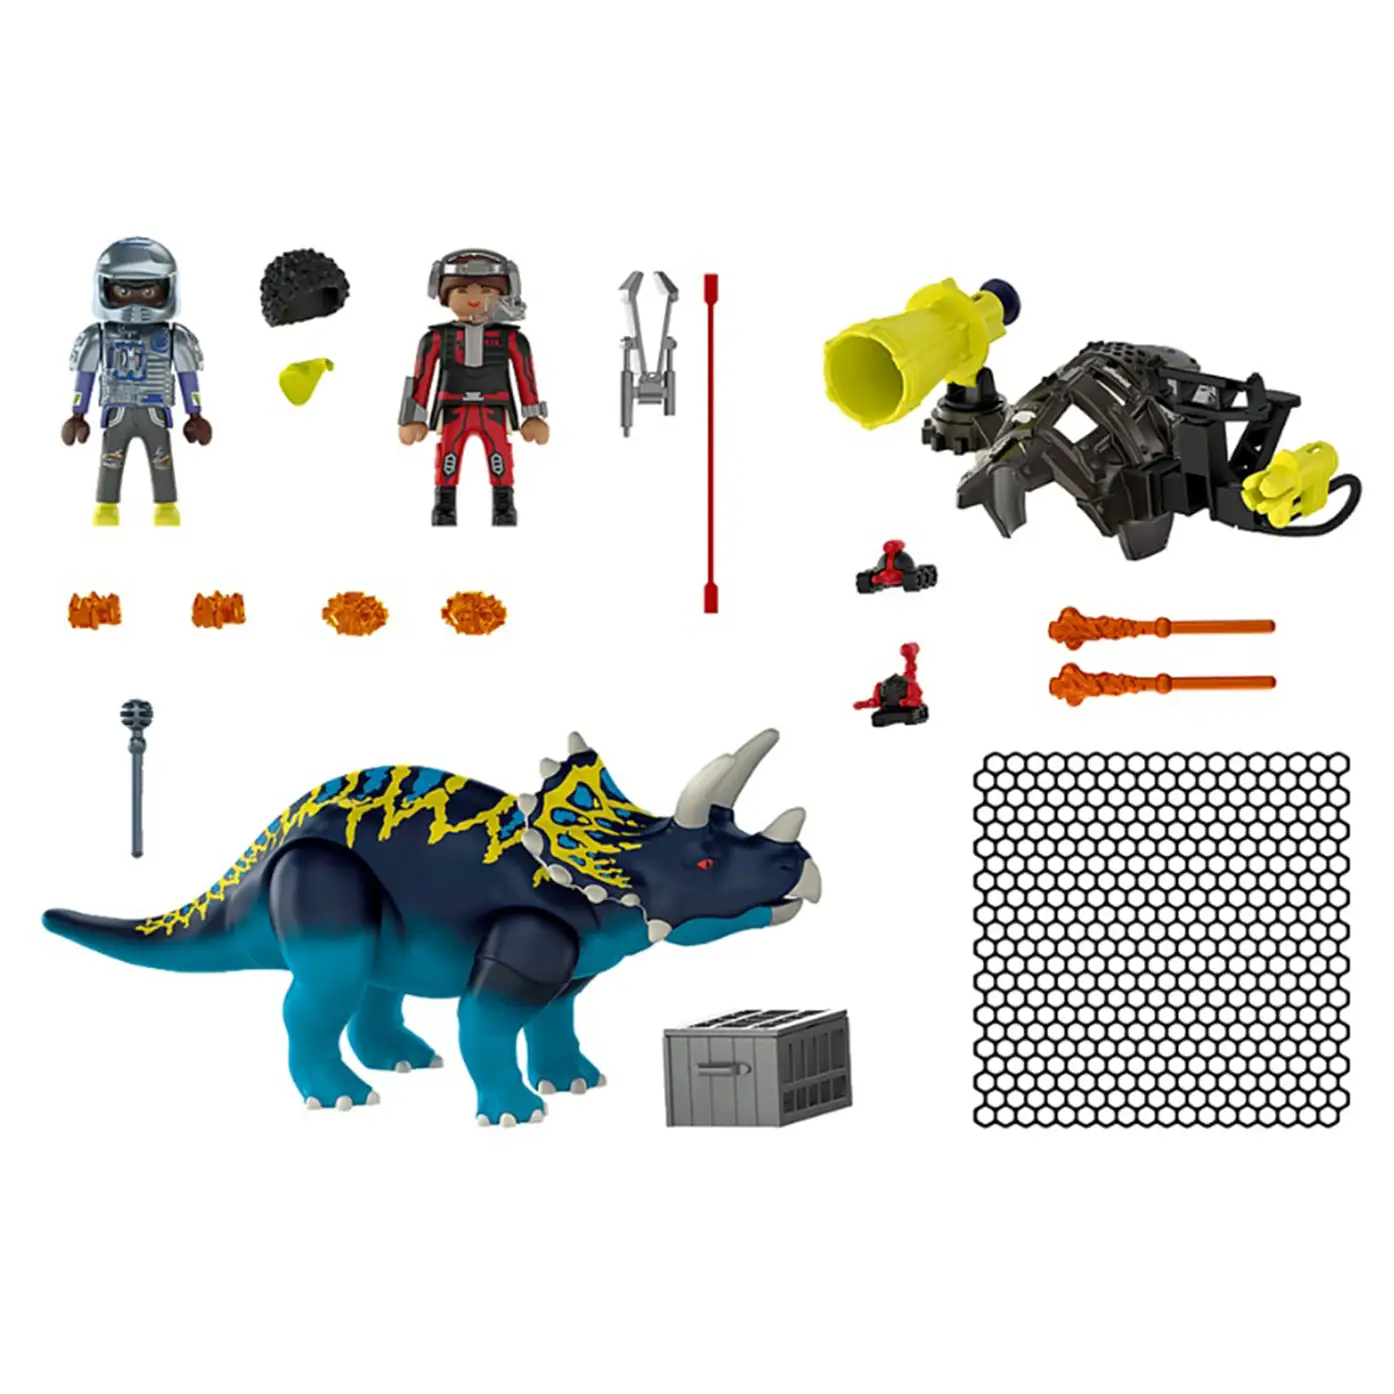 Playmobil Dino Rise Triceratops: Battle for the Legendary